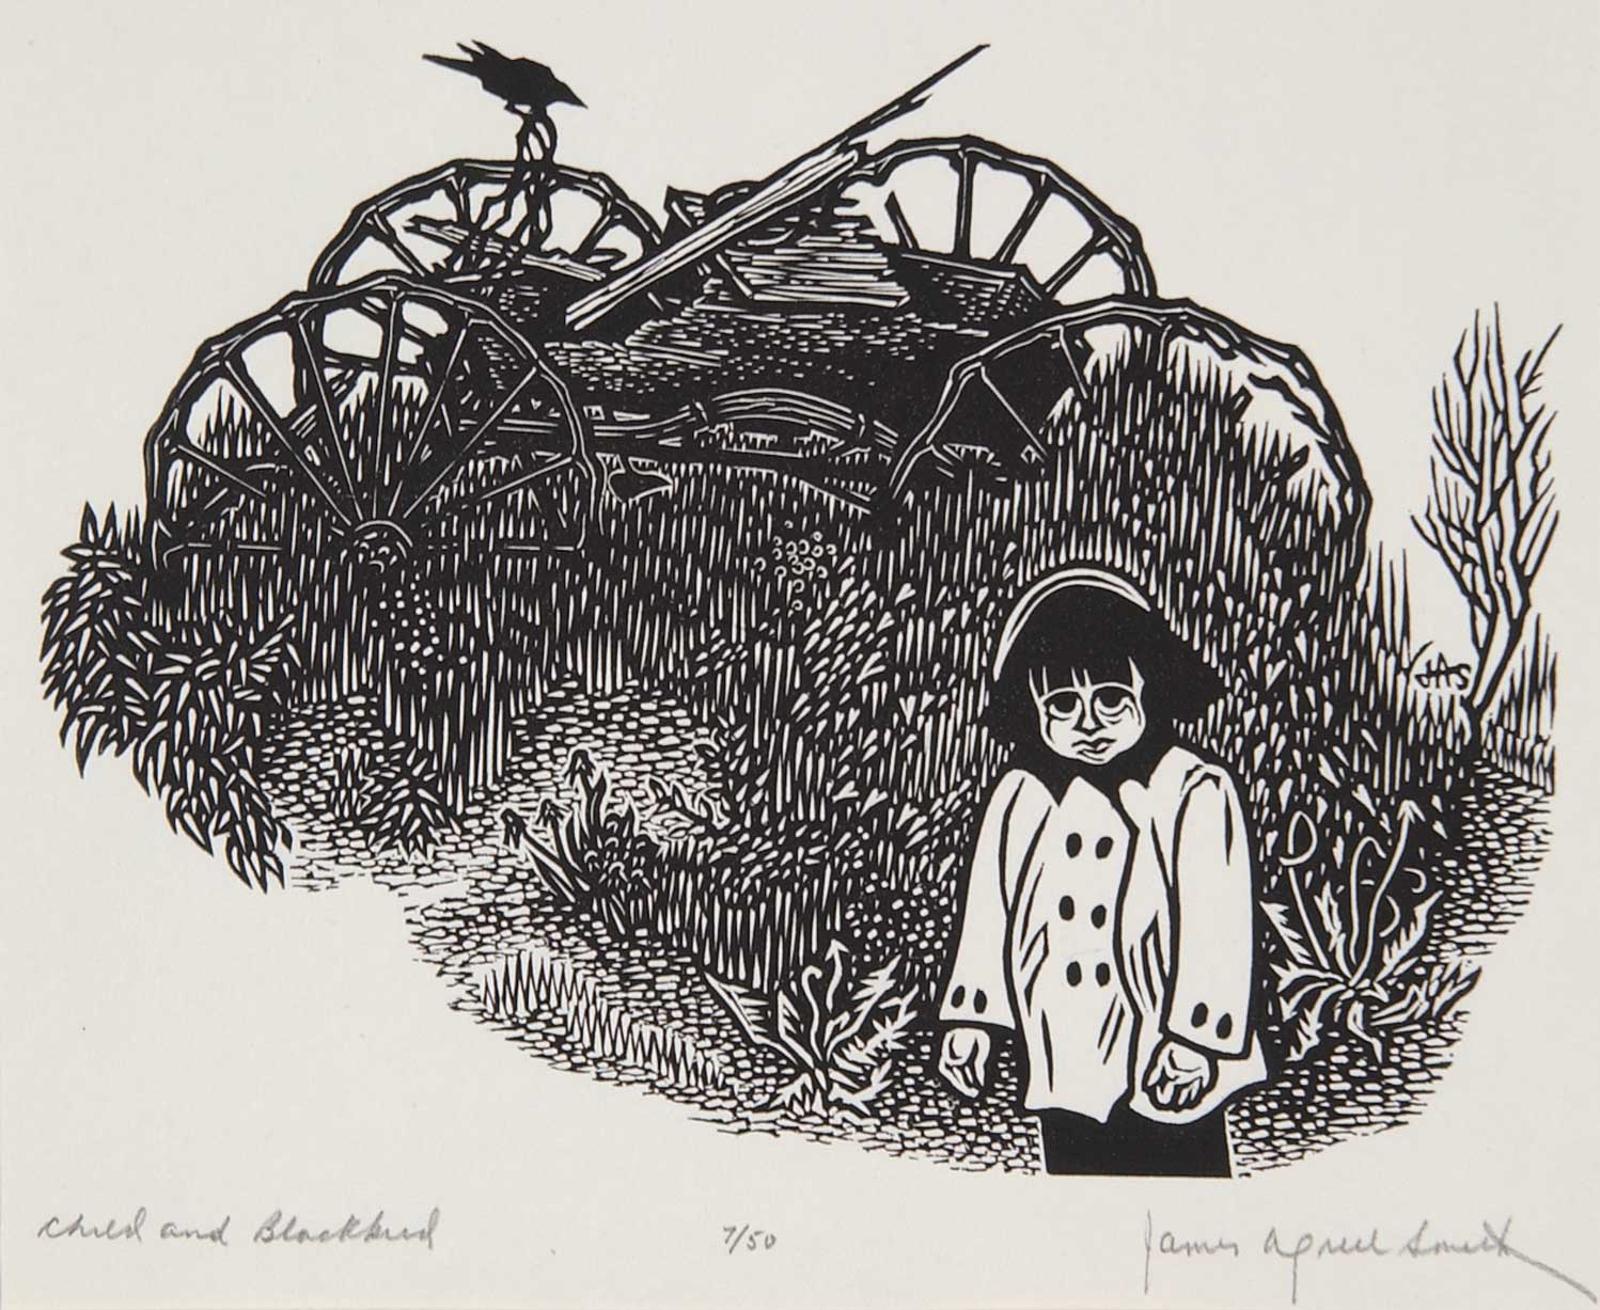 James Agrell Smith - Child and Blackbird  #7/50